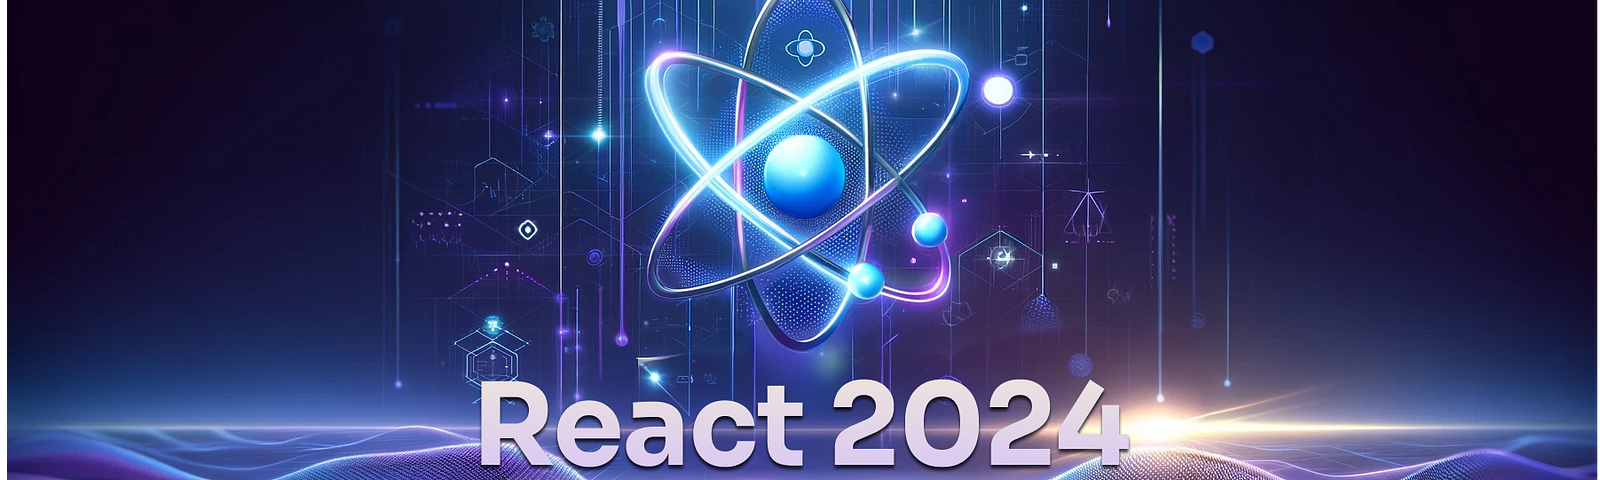 React 2024 — Emerging Trends